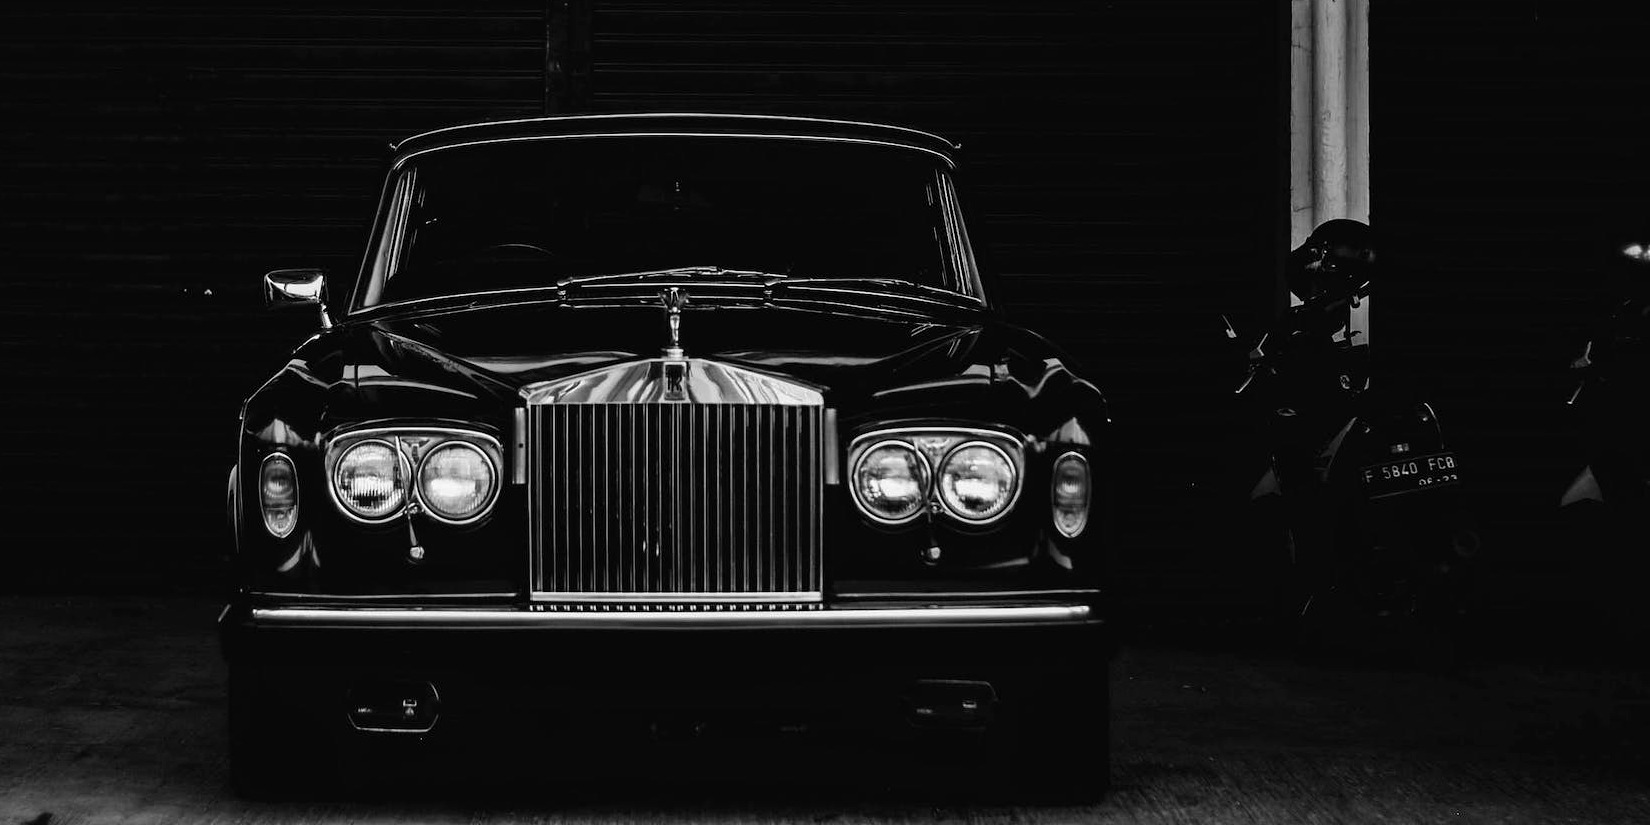 The Rolls Royce Phantom Experience: What Makes it the Peak of Automotive Luxury?